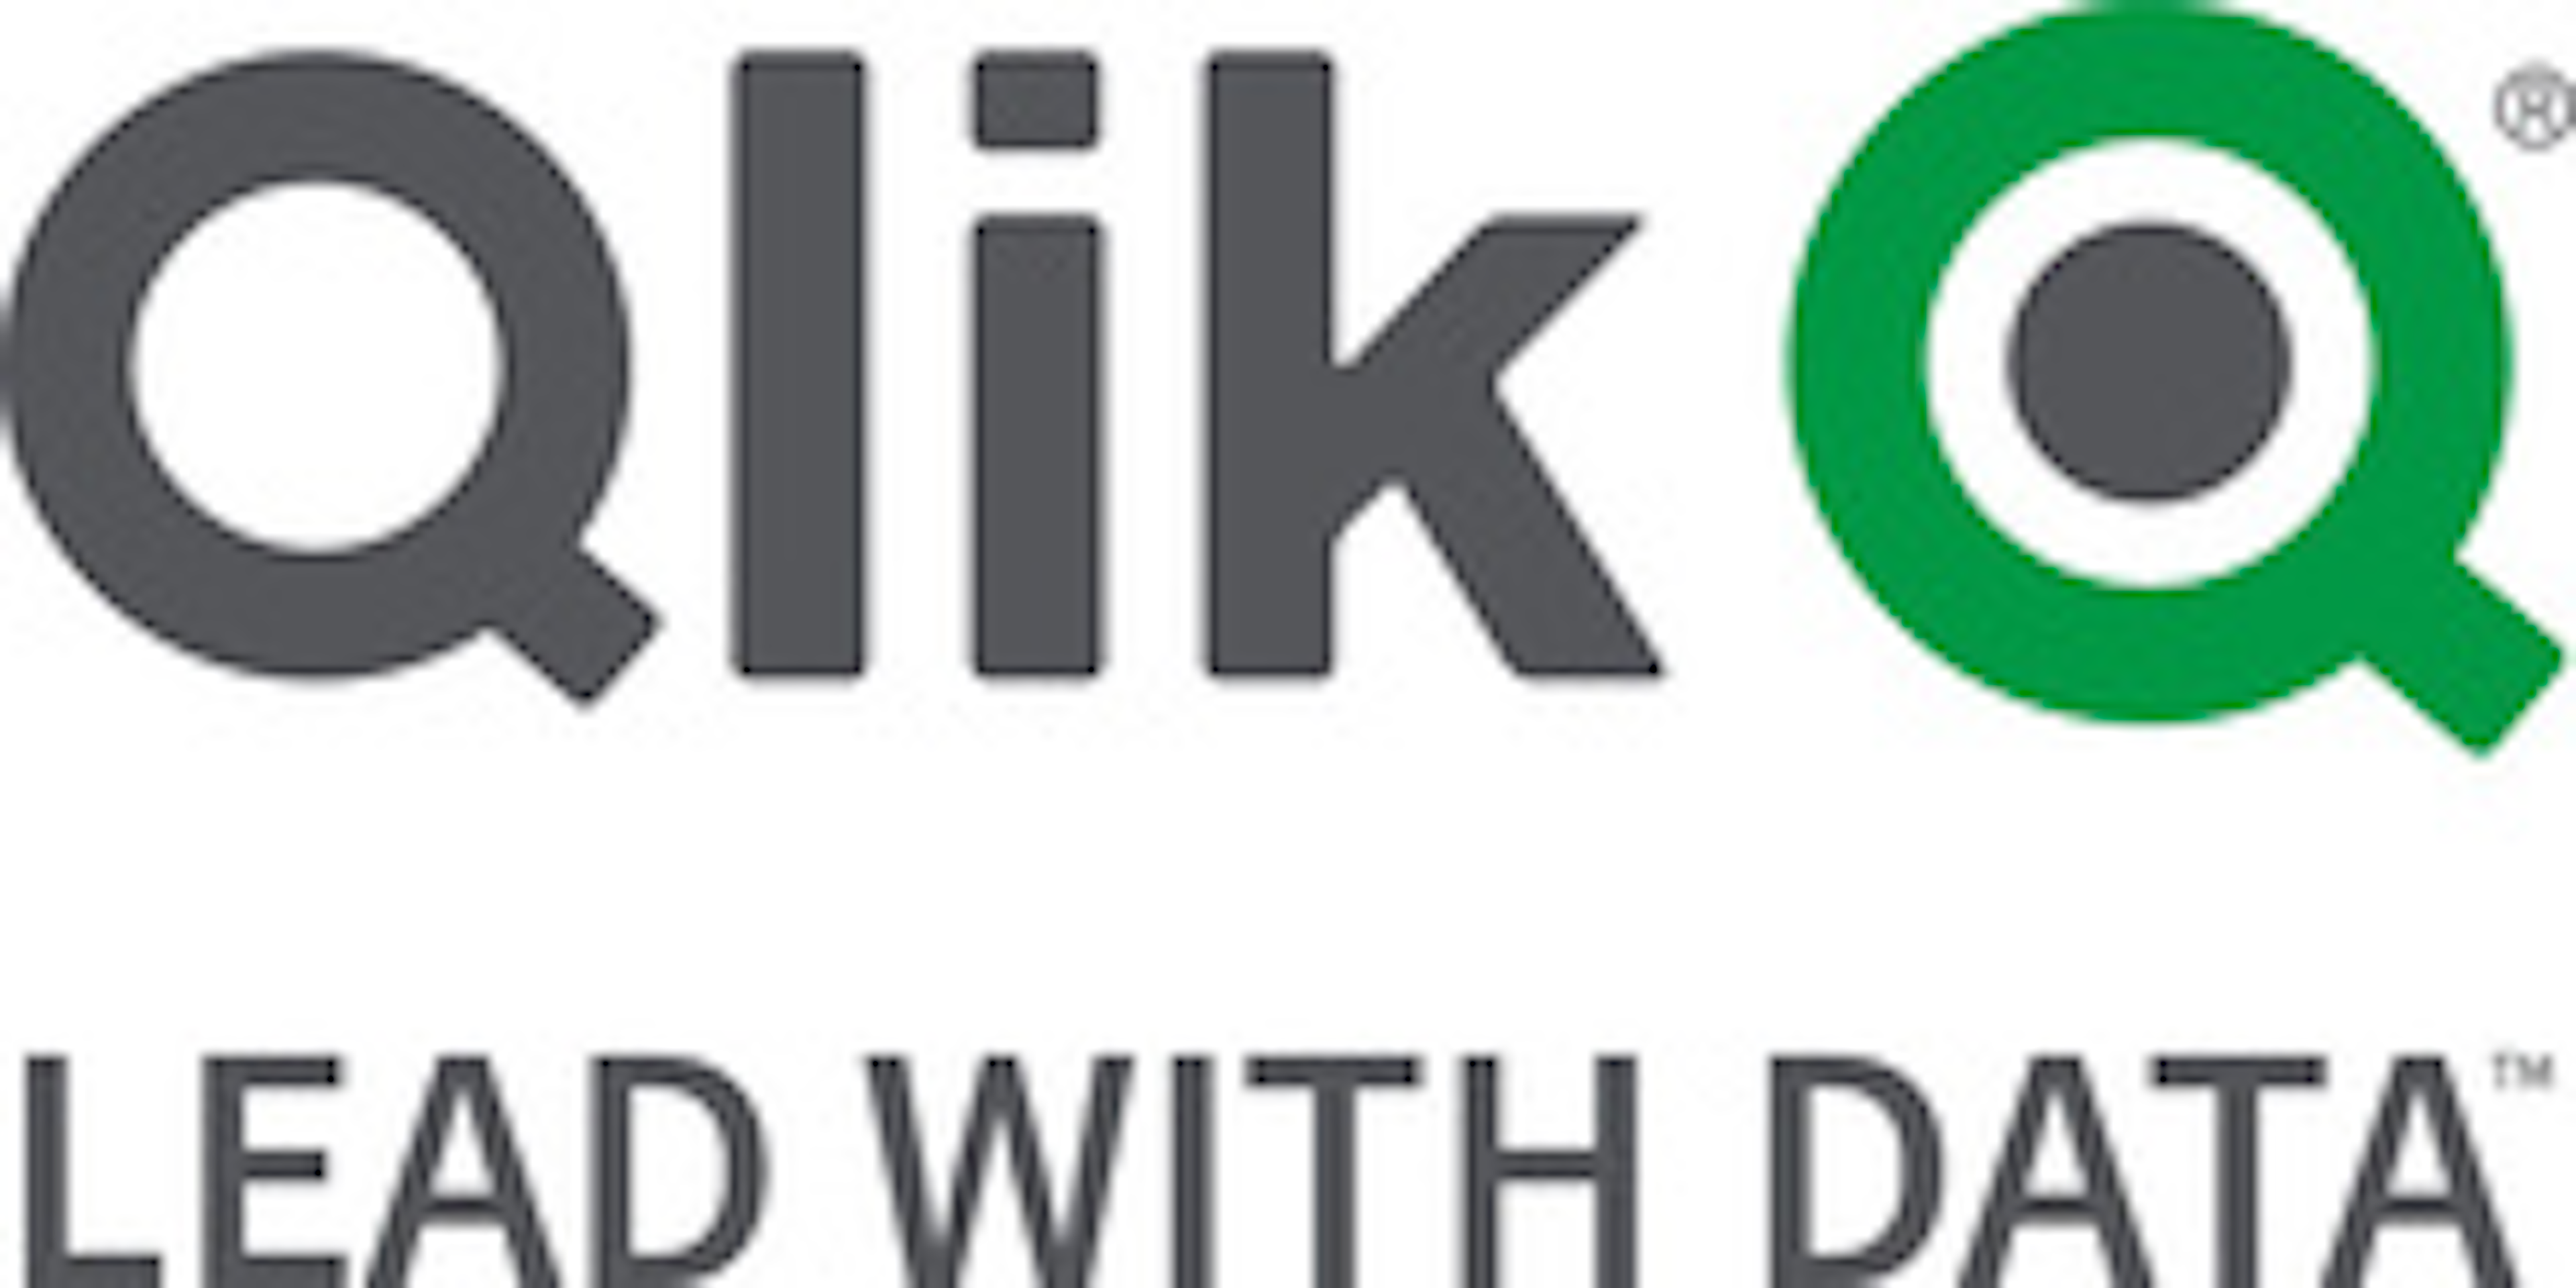 QlikView Logo